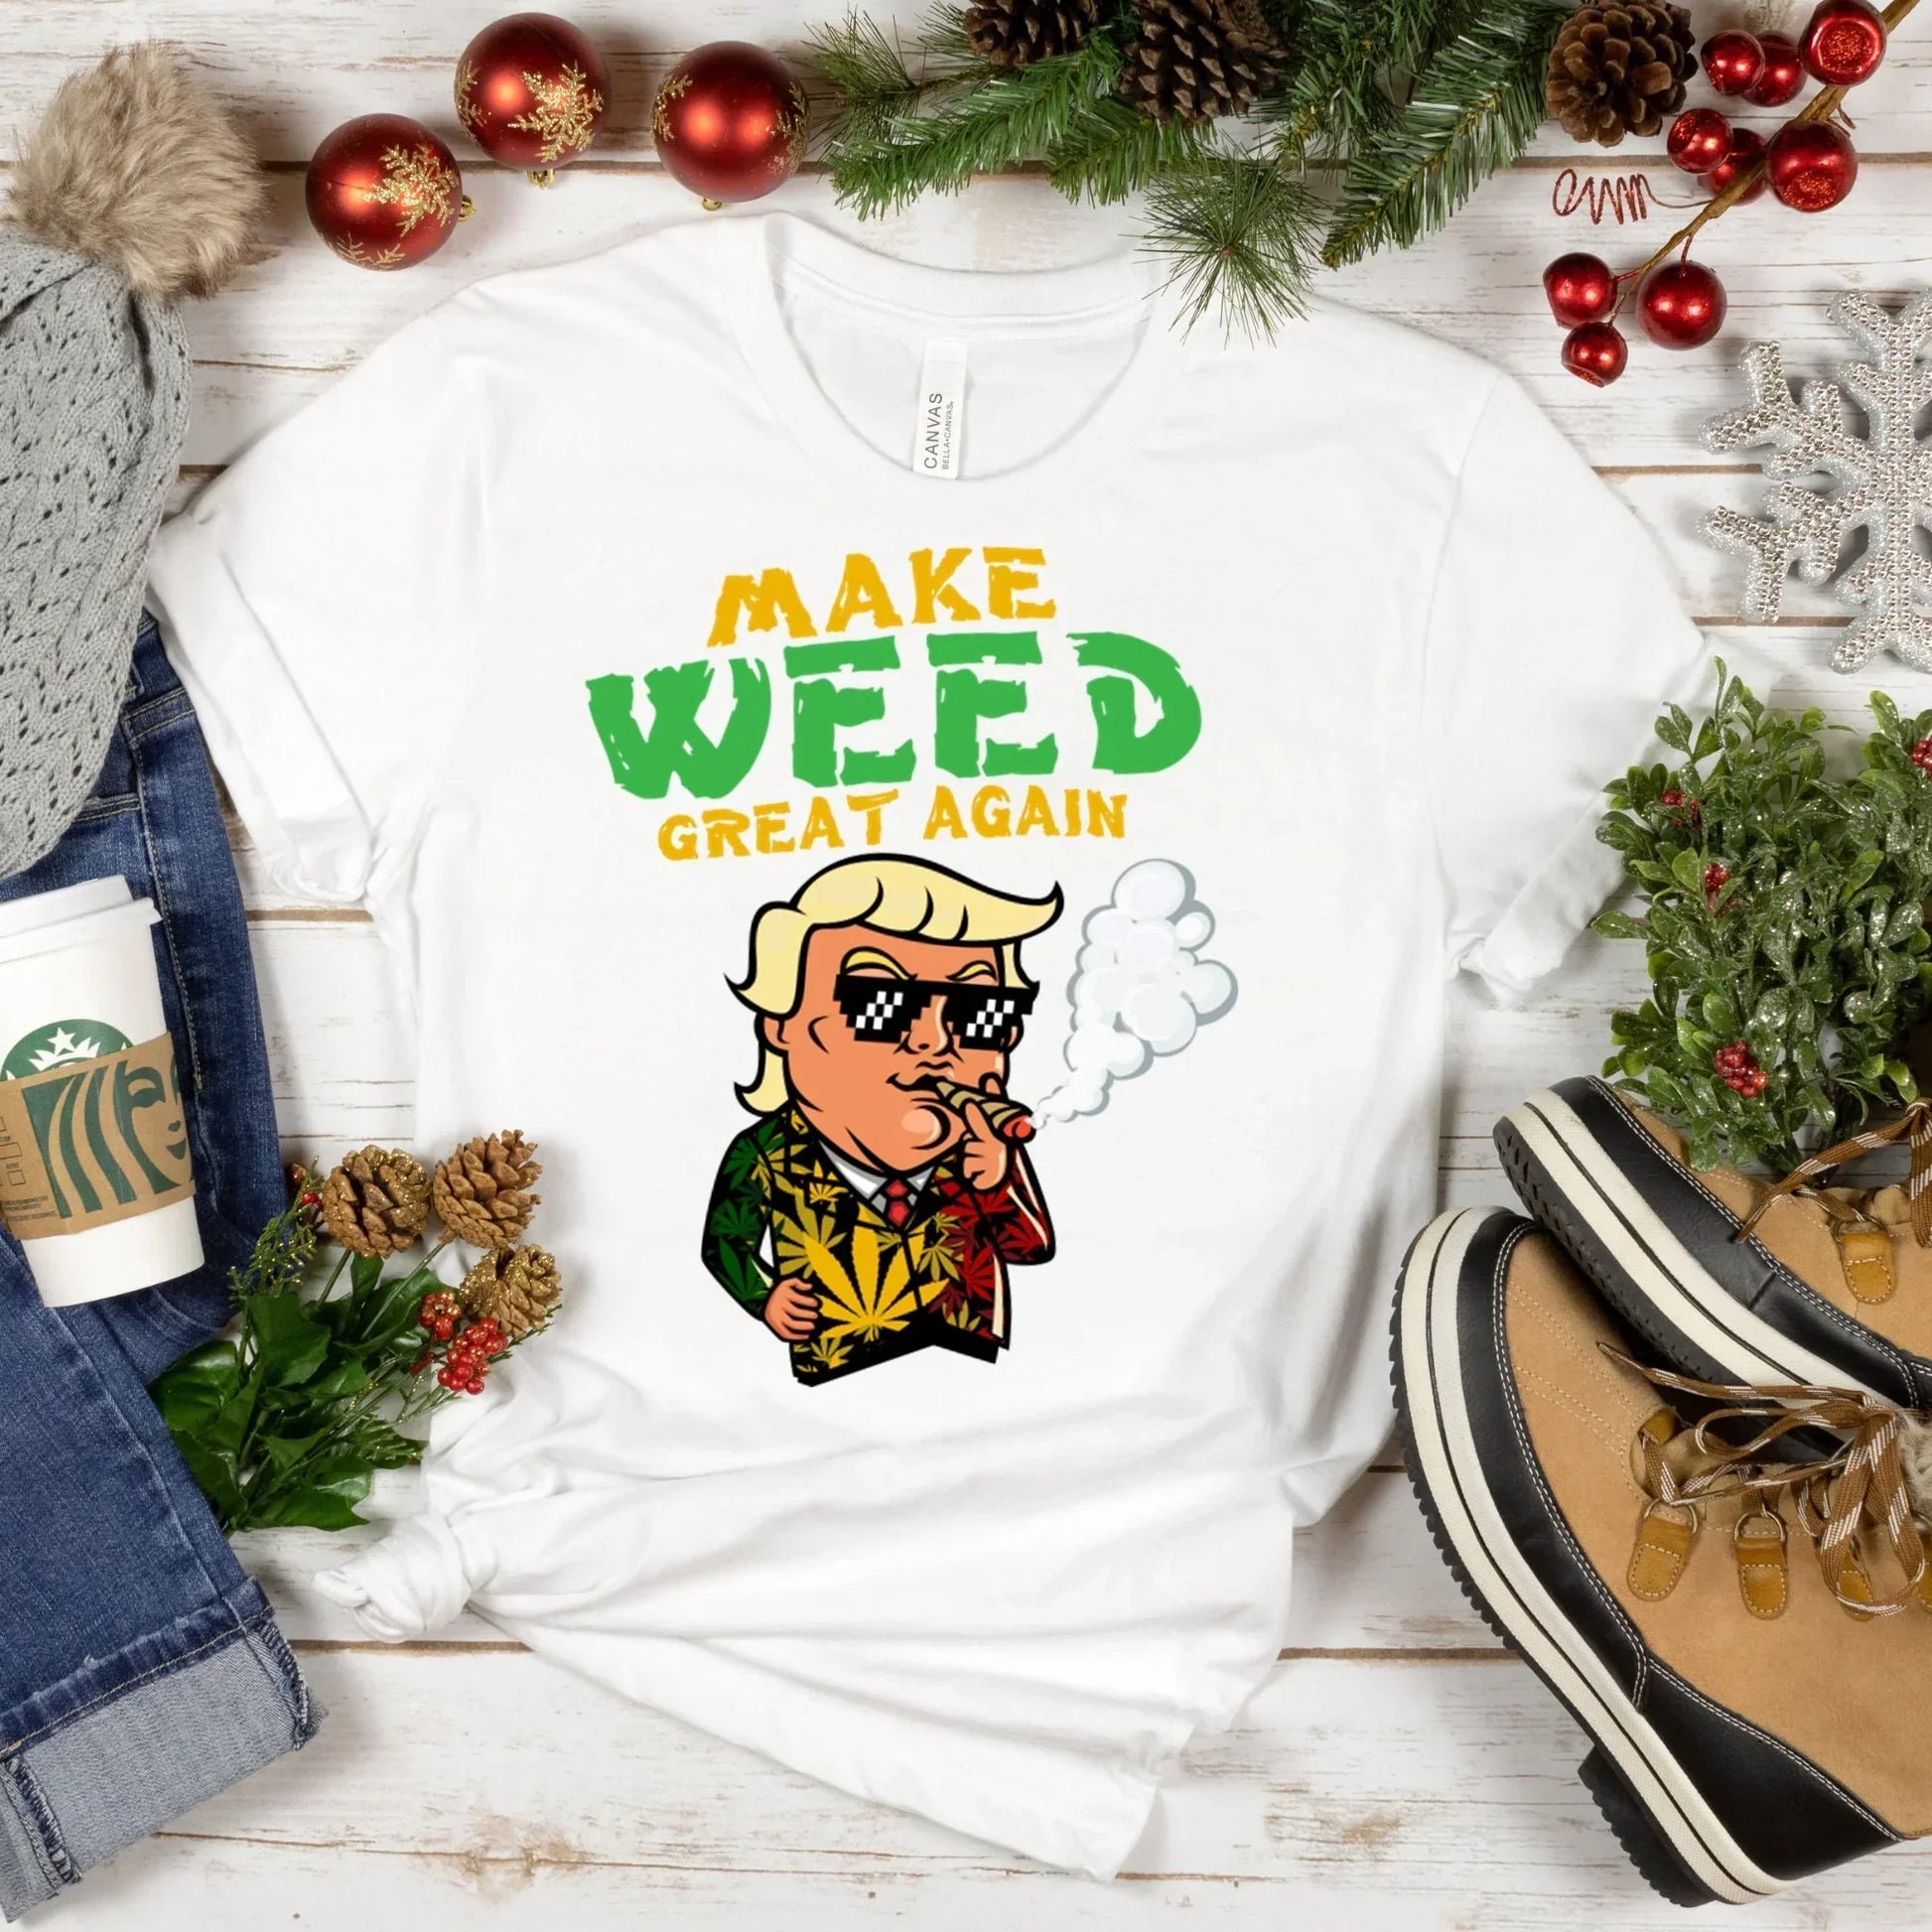 Make Weed Great Again, Funny Trump Shirt